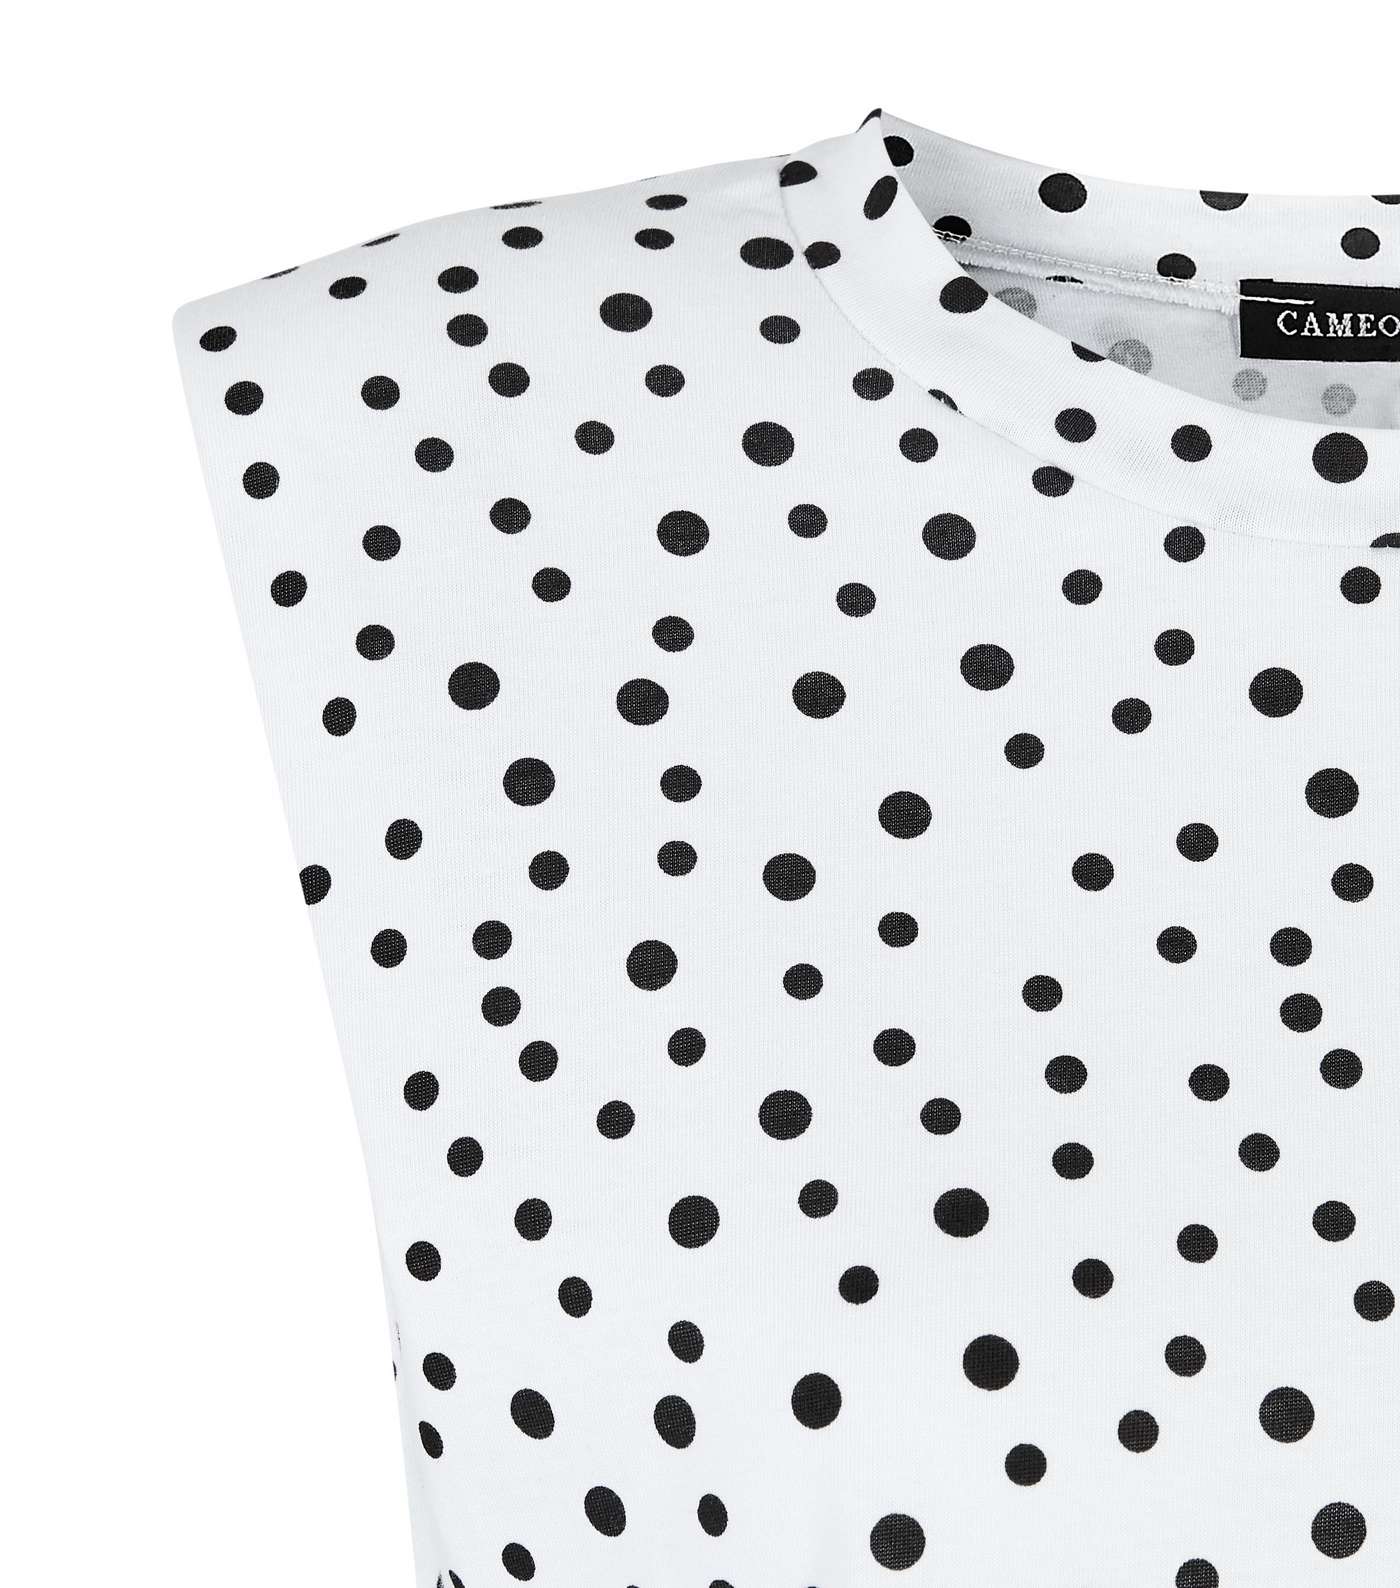 Cameo Rose White Spot Shoulder Pad T-Shirt Image 4